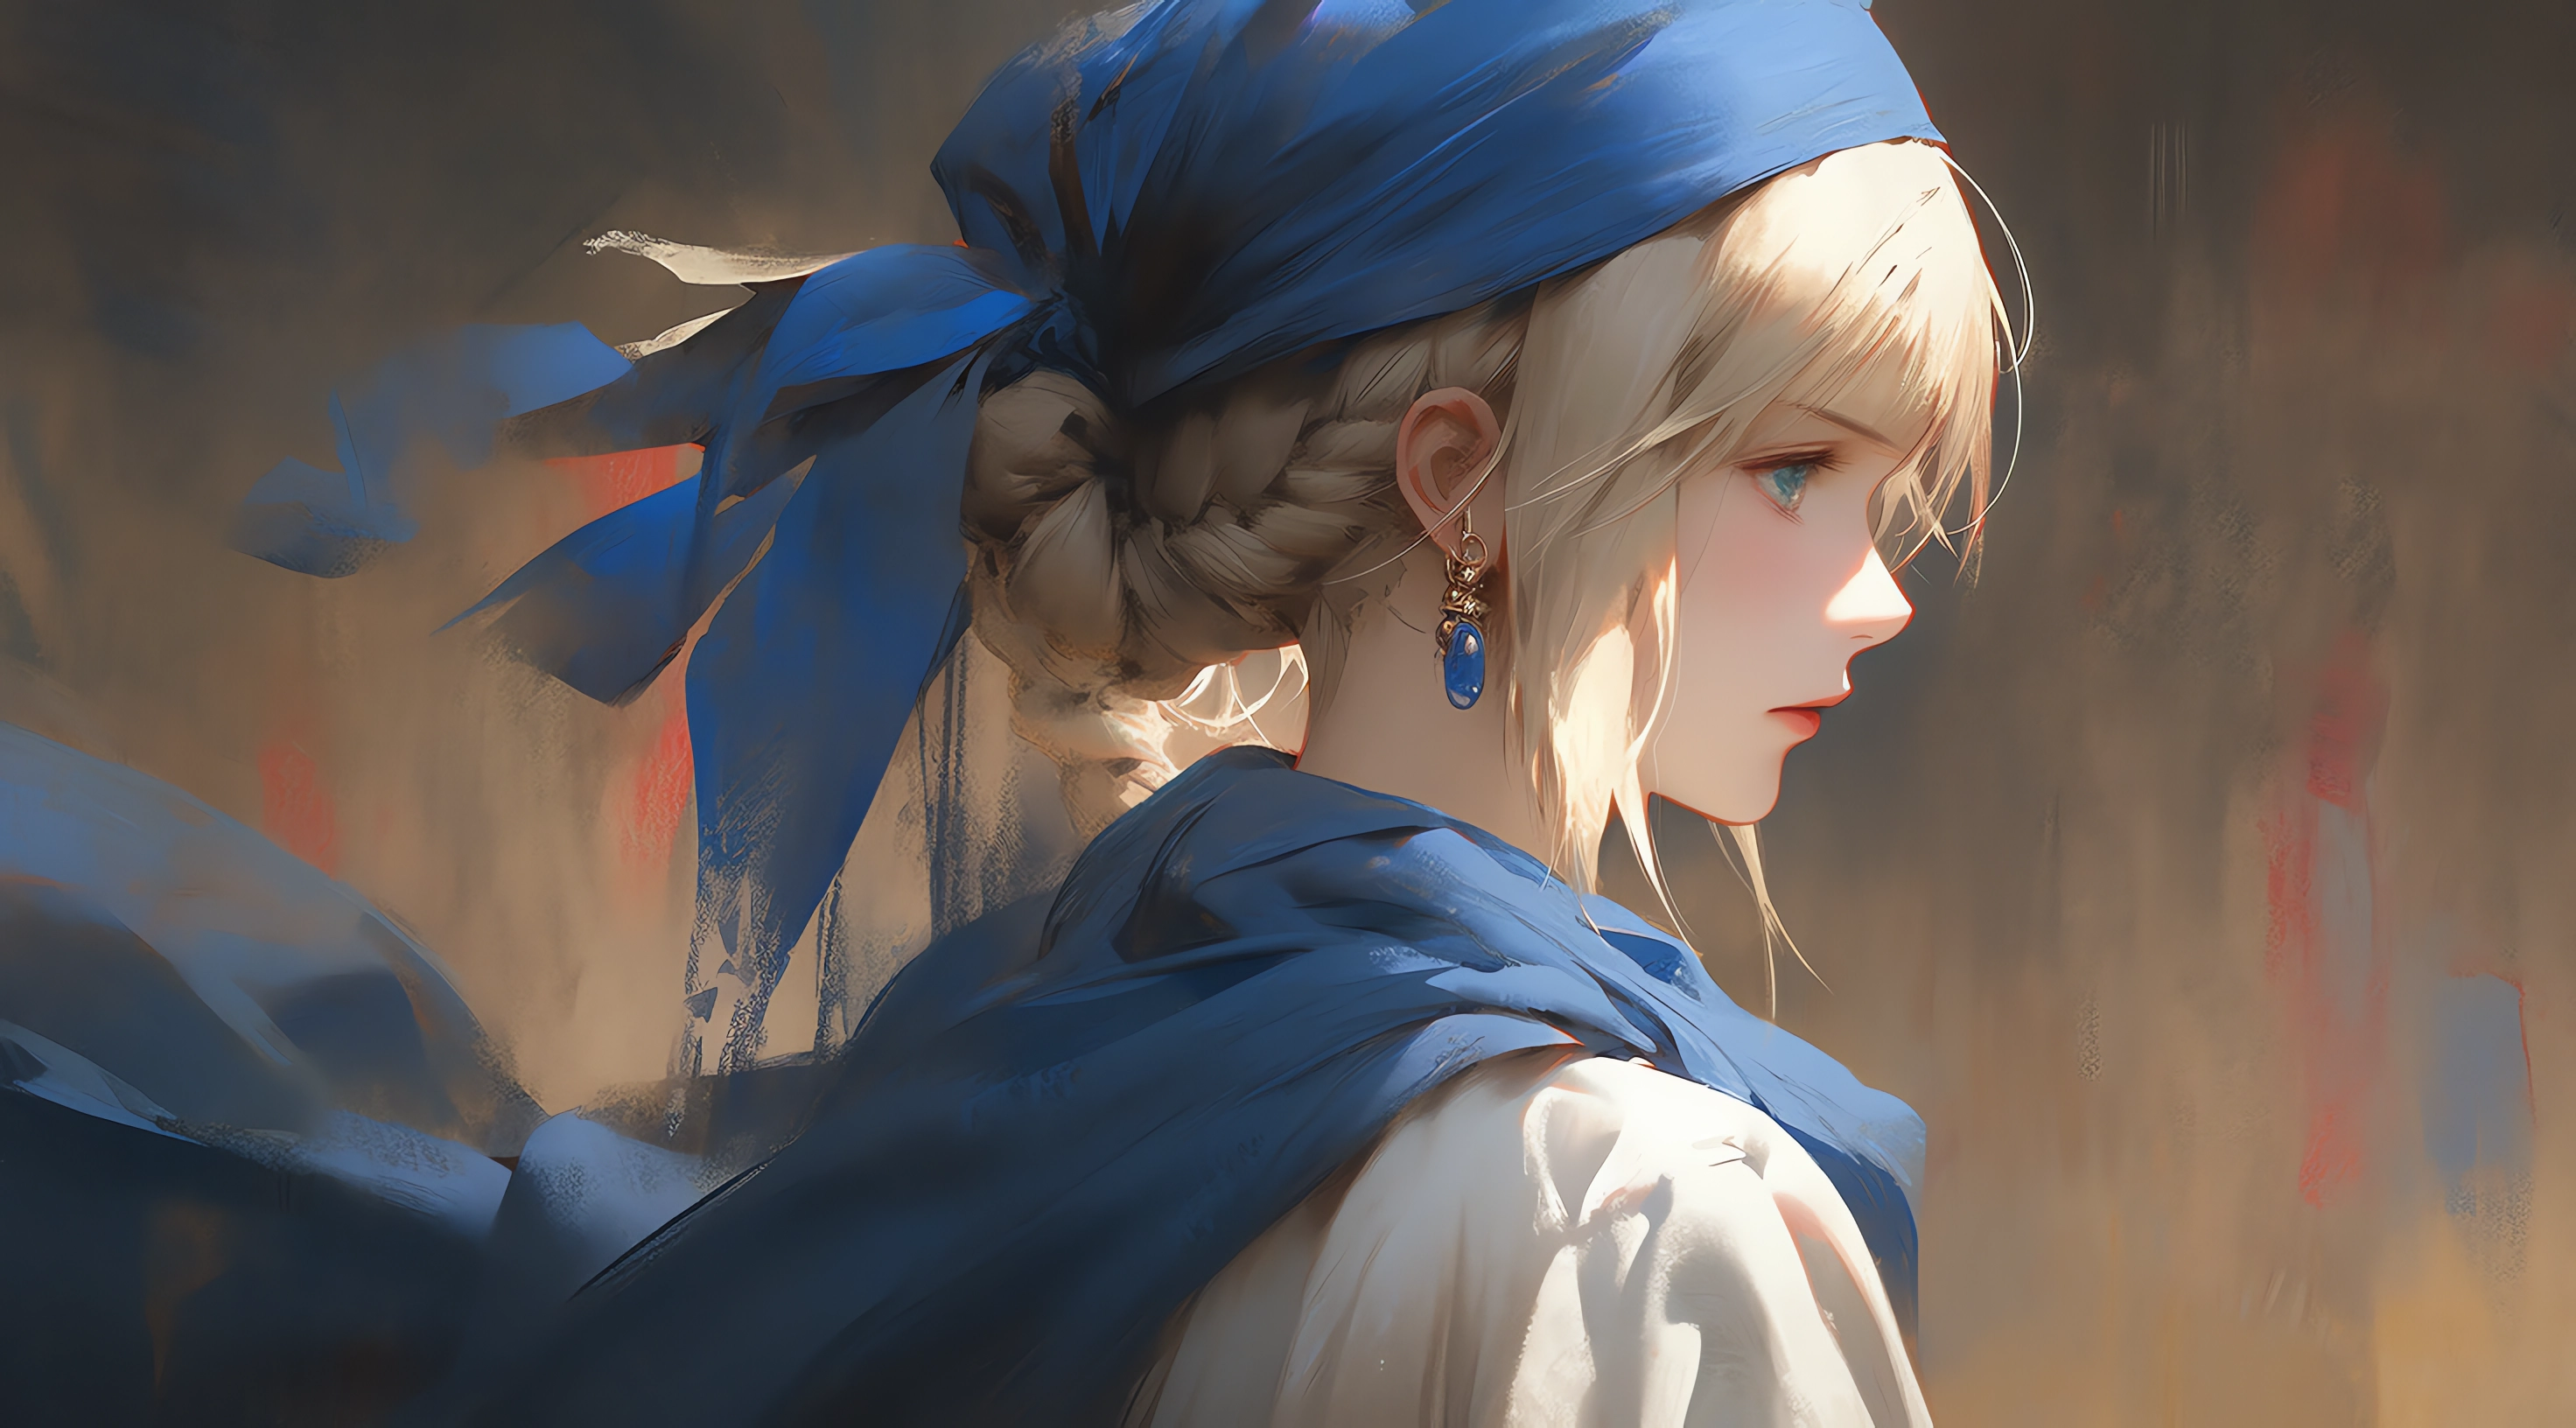 Anime 2944x1632 anime anime girls profile braids looking away earring blonde blue eyes simple background minimalism AI art